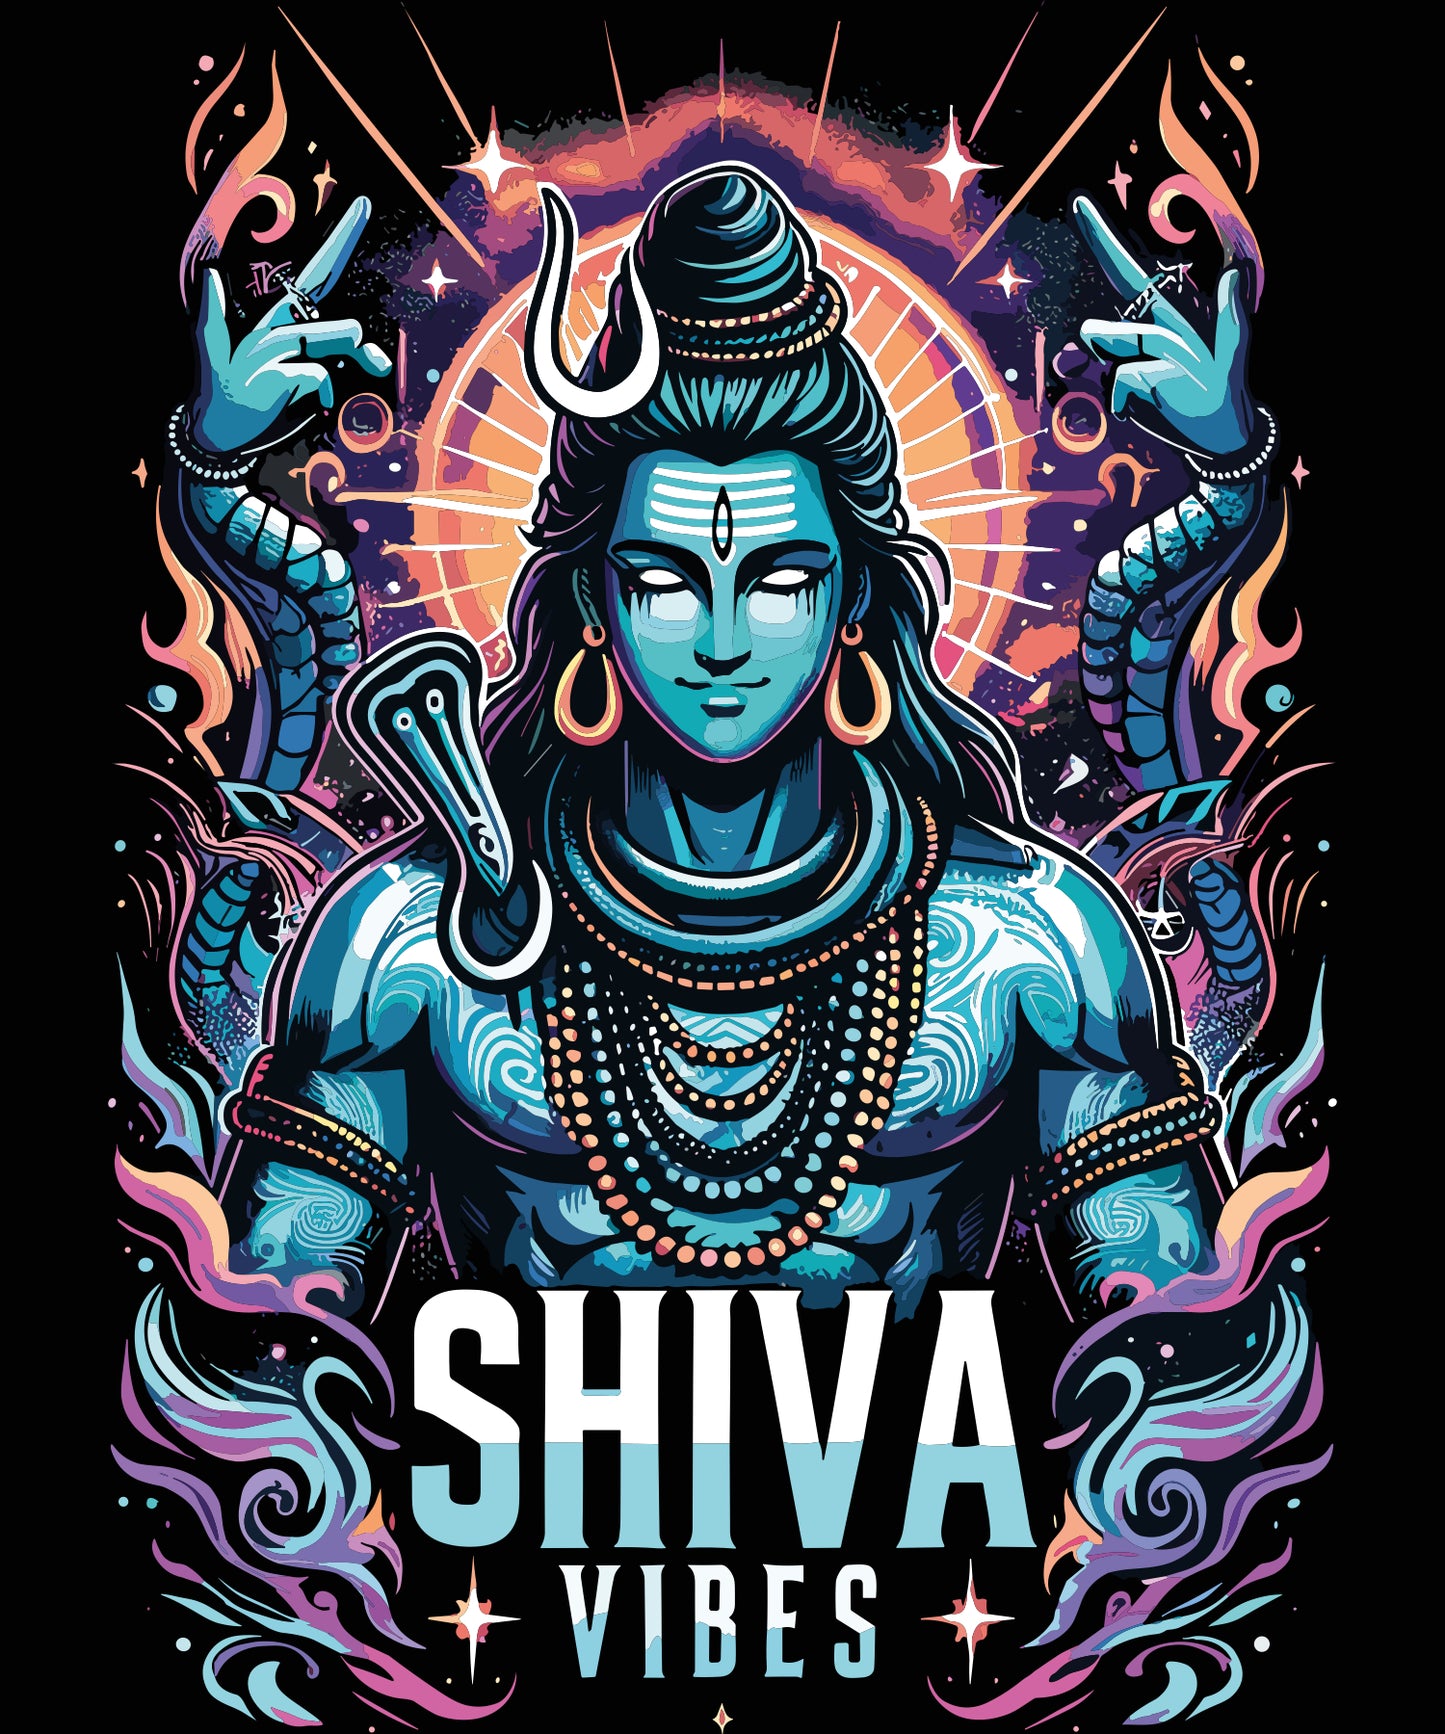 Shiva Vibes Black DropShoulder T-Shirt